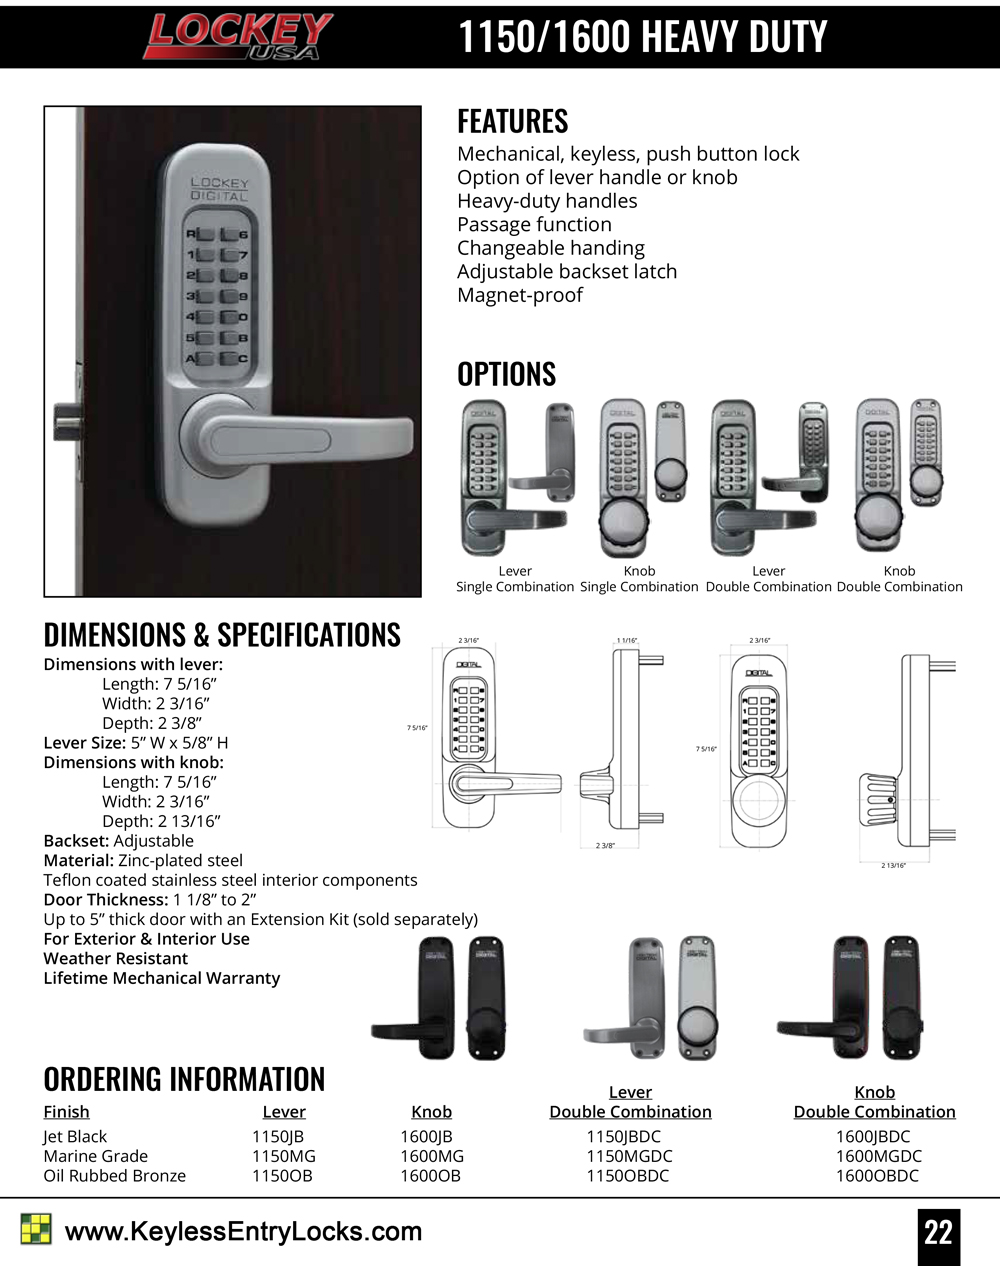 Lockey 1600DC Heavy-Duty Knob-Handle Latchbolt Keypad Lock